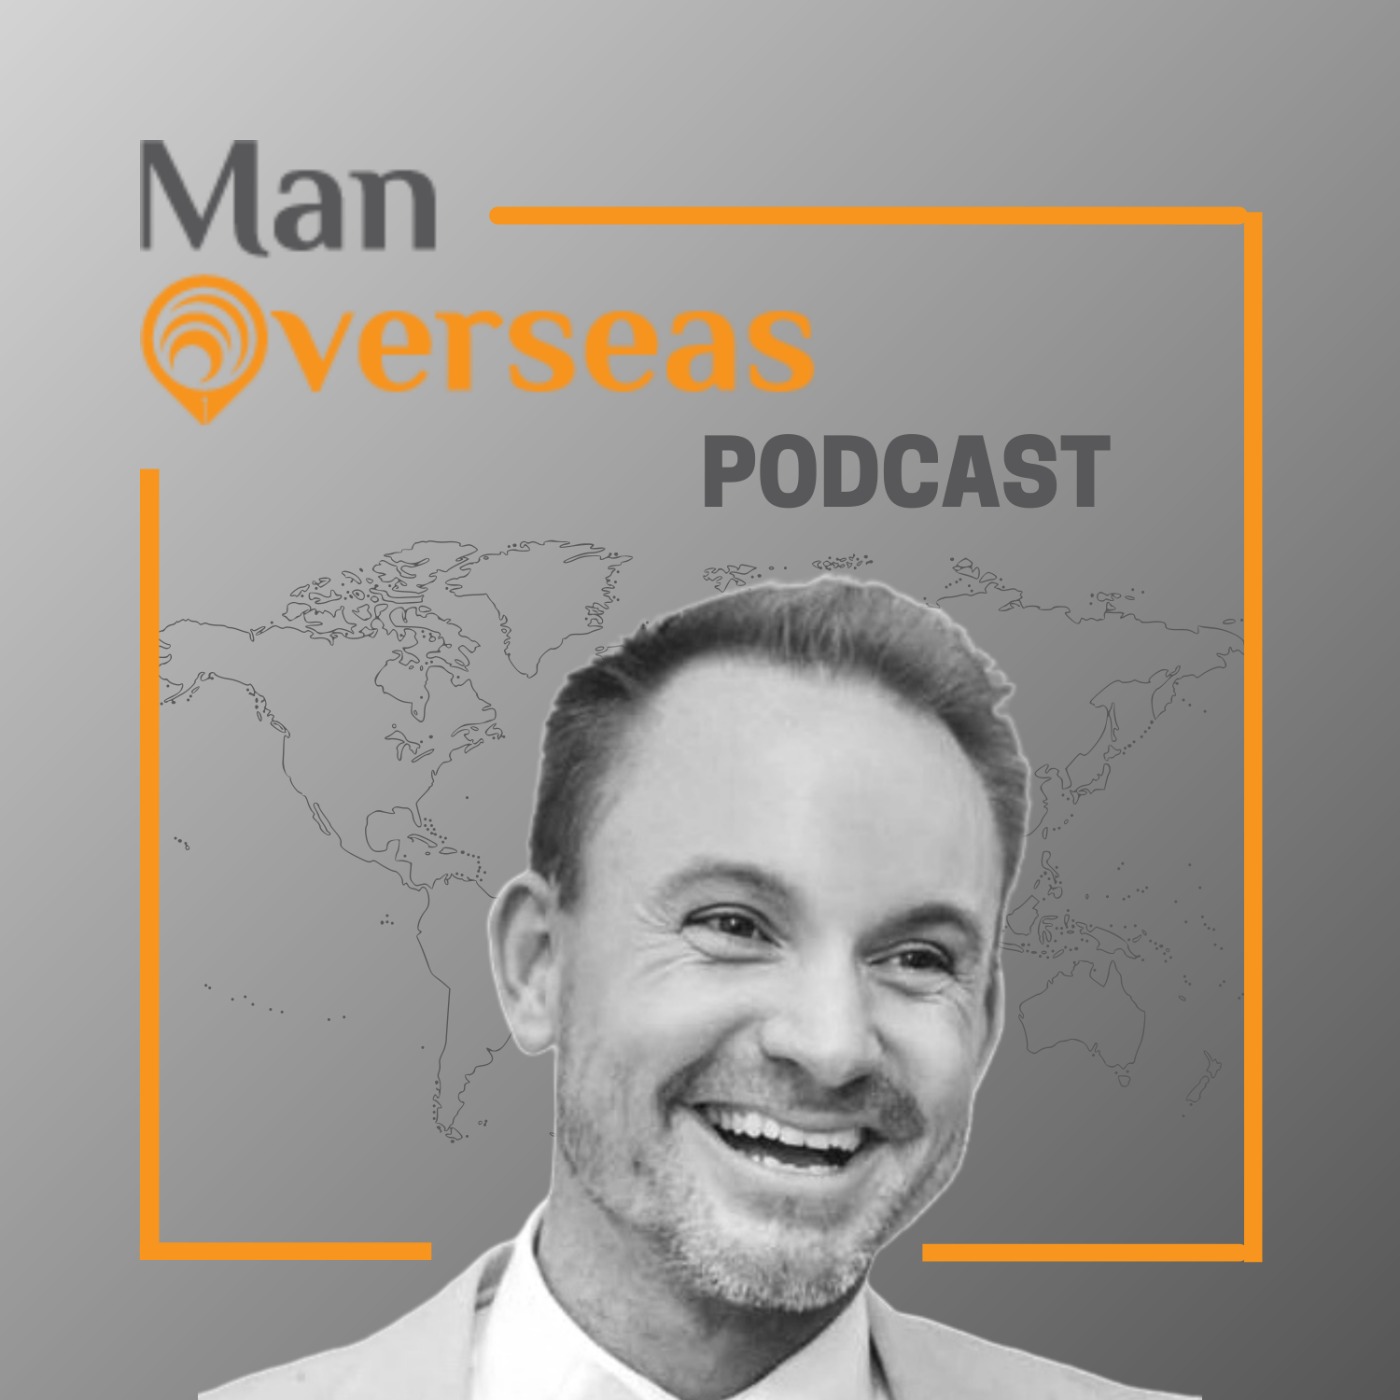 Man Overseas Podcast